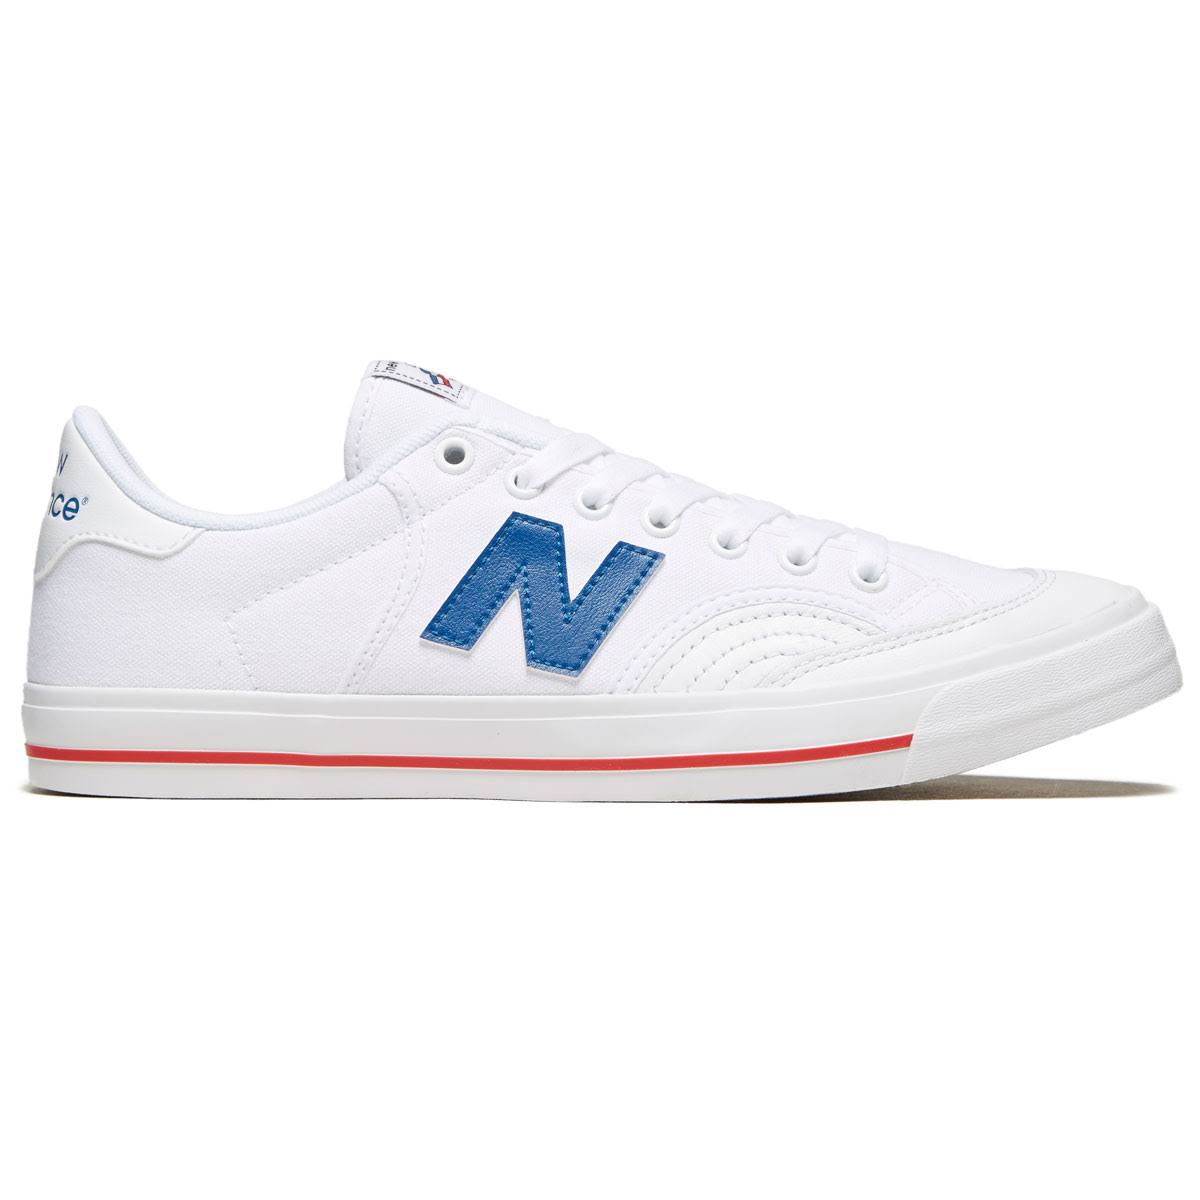 New Balance 212 Shoes - White/Blue - 10.5